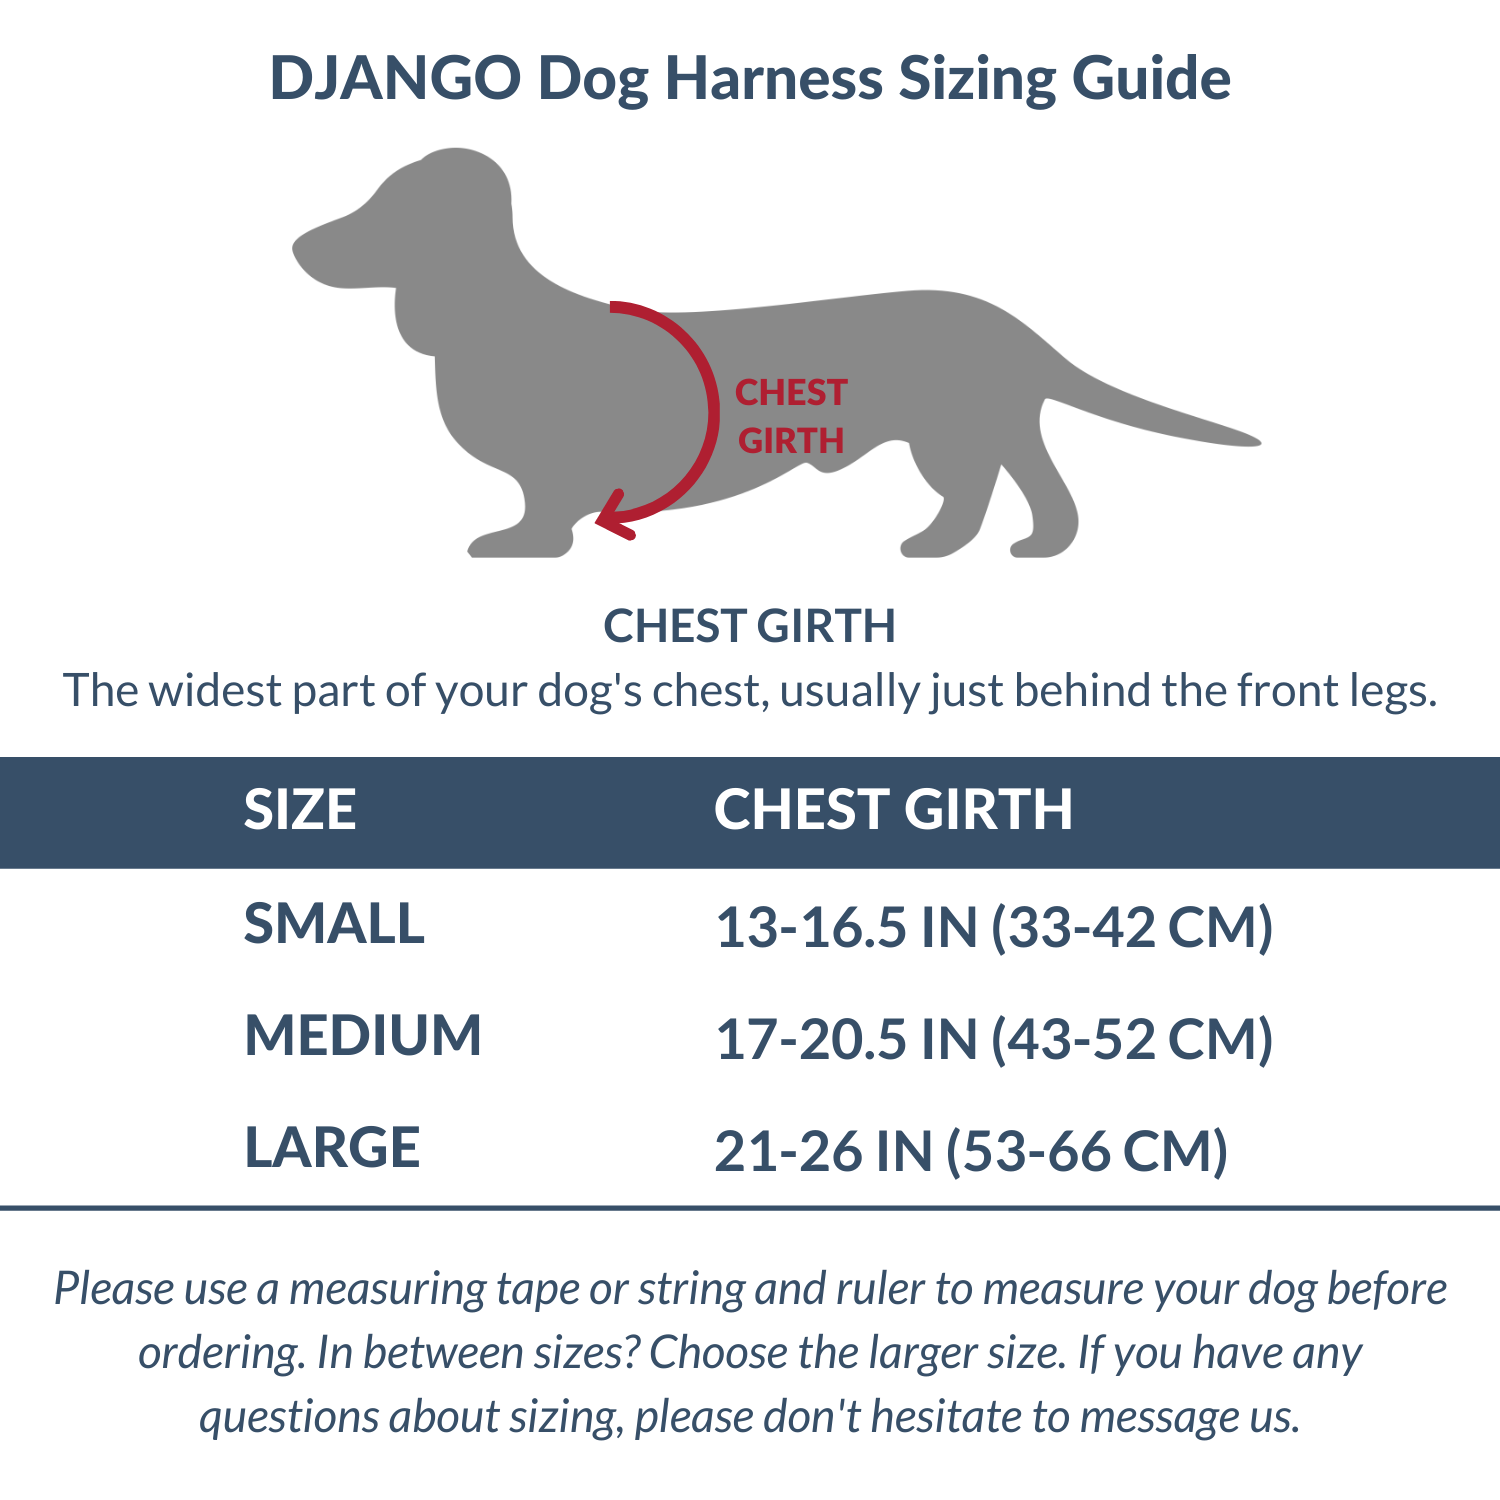 Black Adventure Dog Harness - Harness - Holler Brighton - DJango